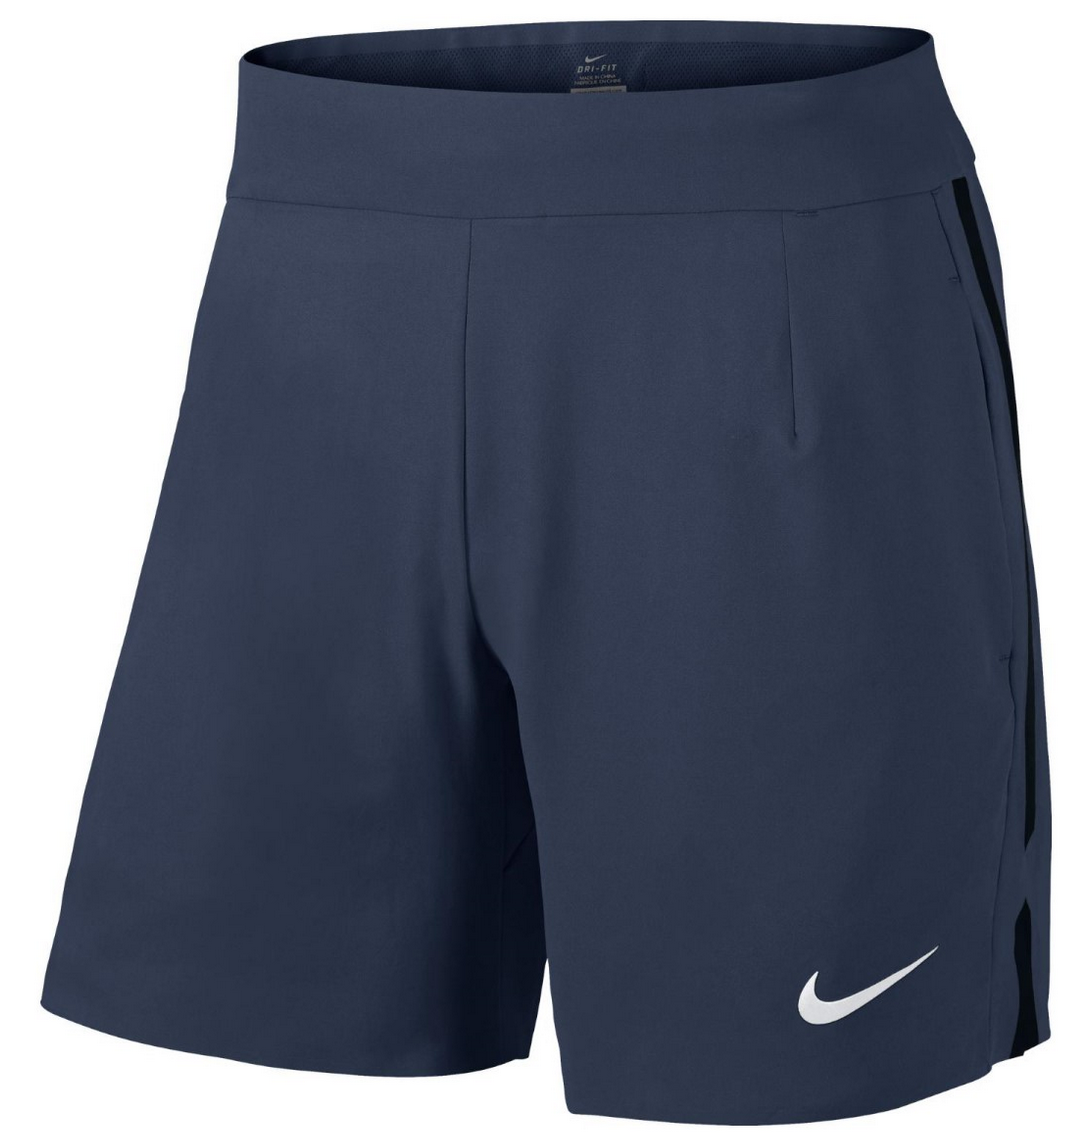 Roger Federer 2015 World Tour Finals Nike Outfit